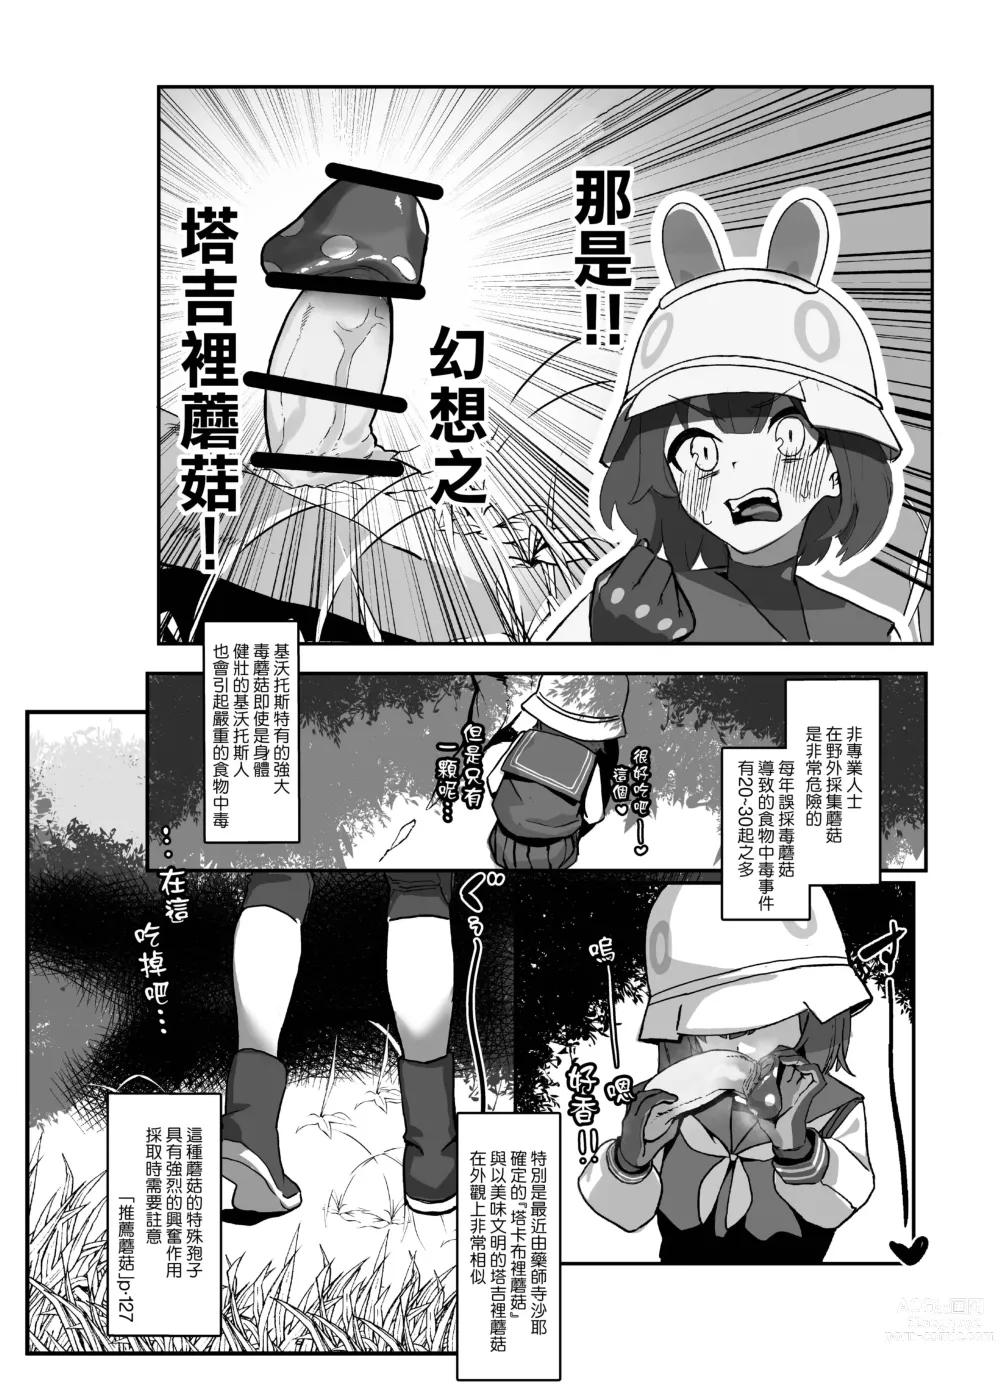 Page 3 of doujinshi Kinokozuki Usagi Musume